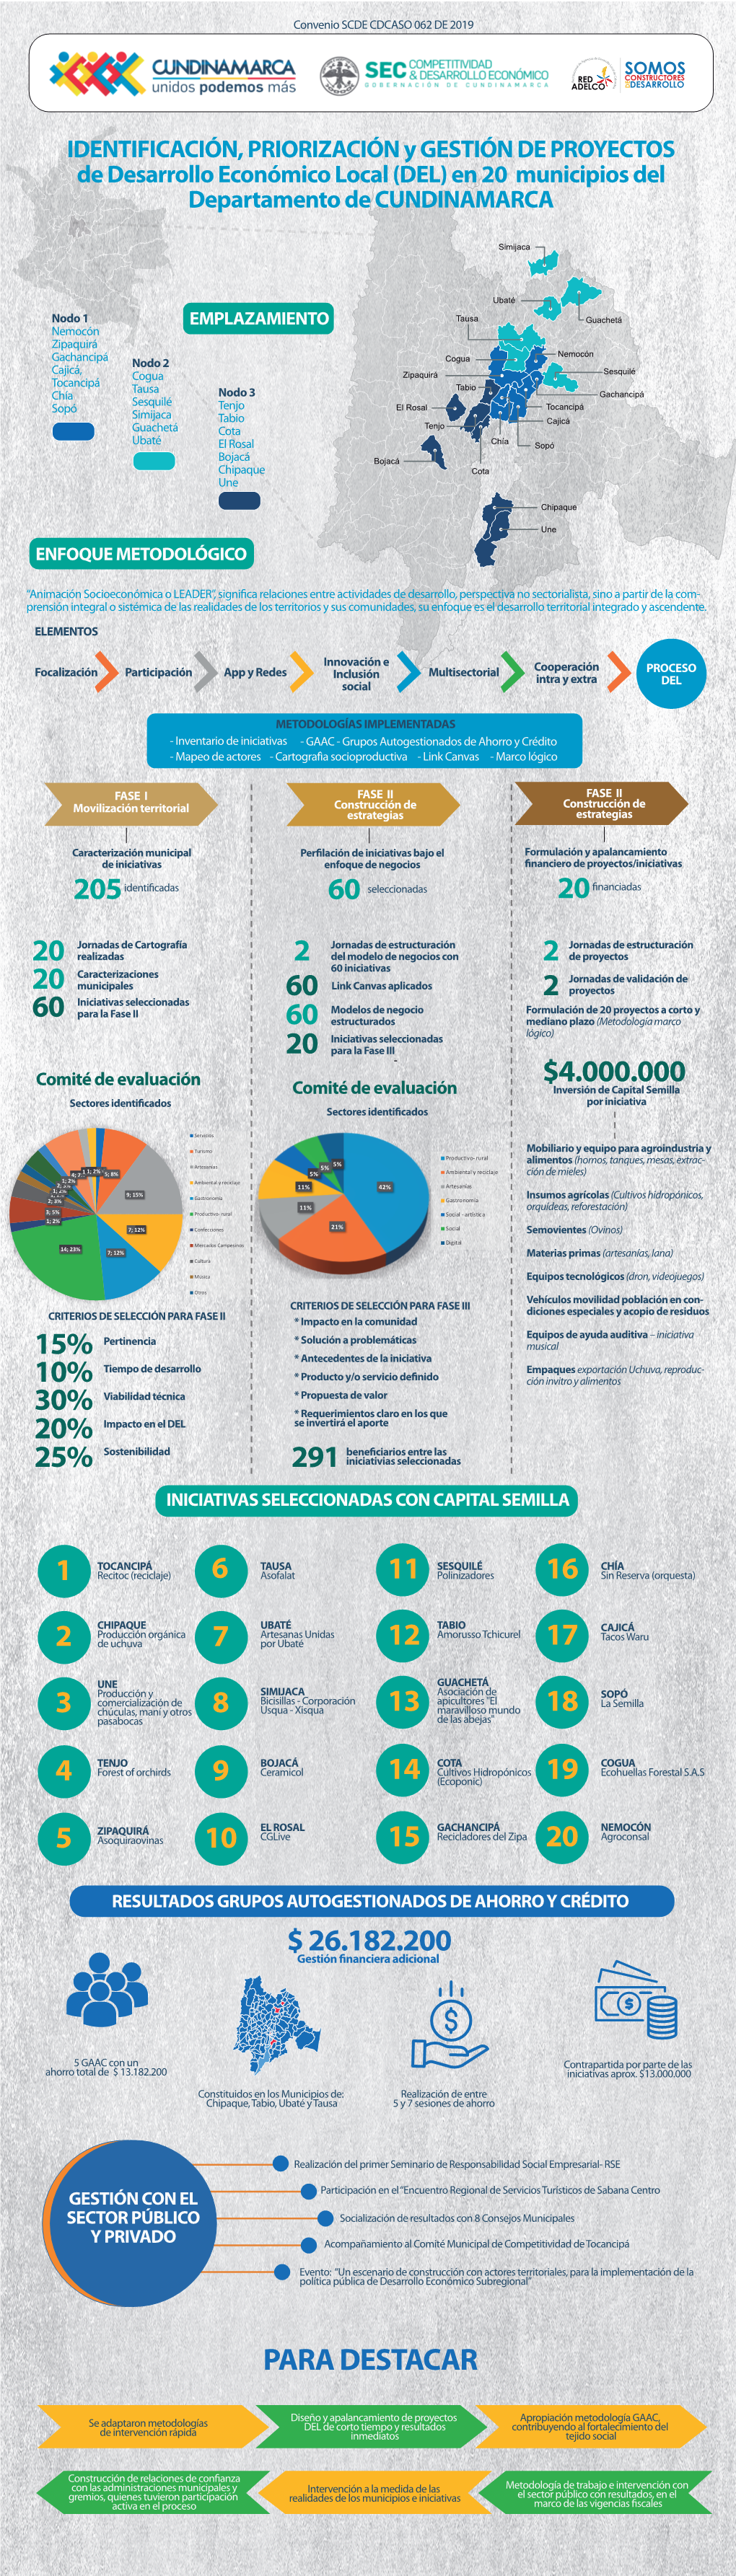 Infografia Resultados Cundinamarca